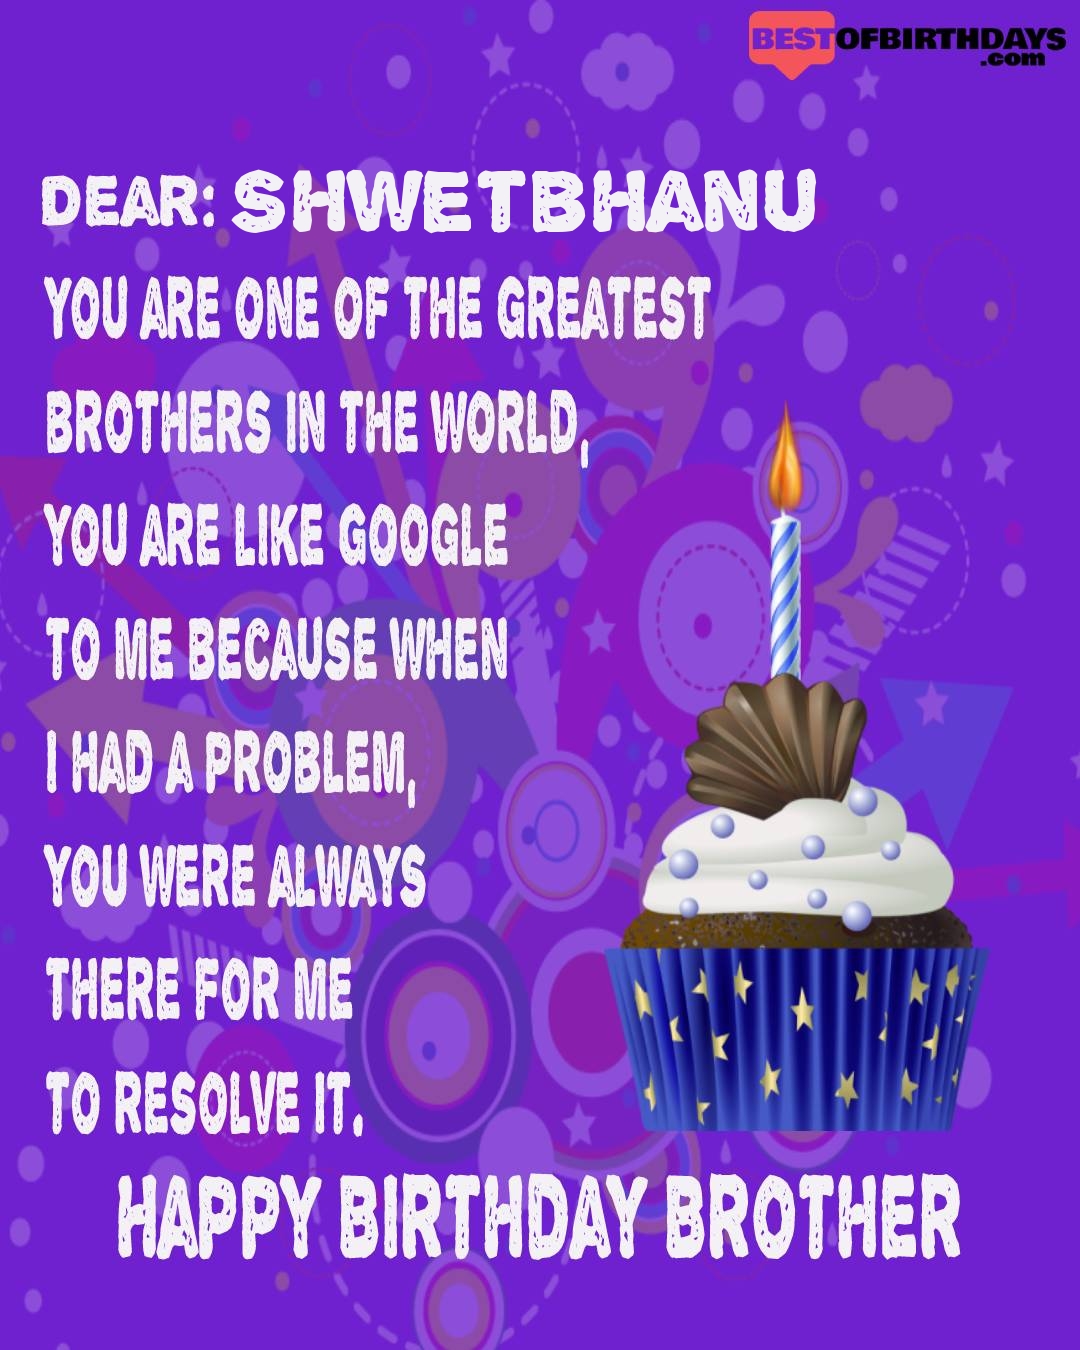 Happy birthday shwetbhanu bhai brother bro